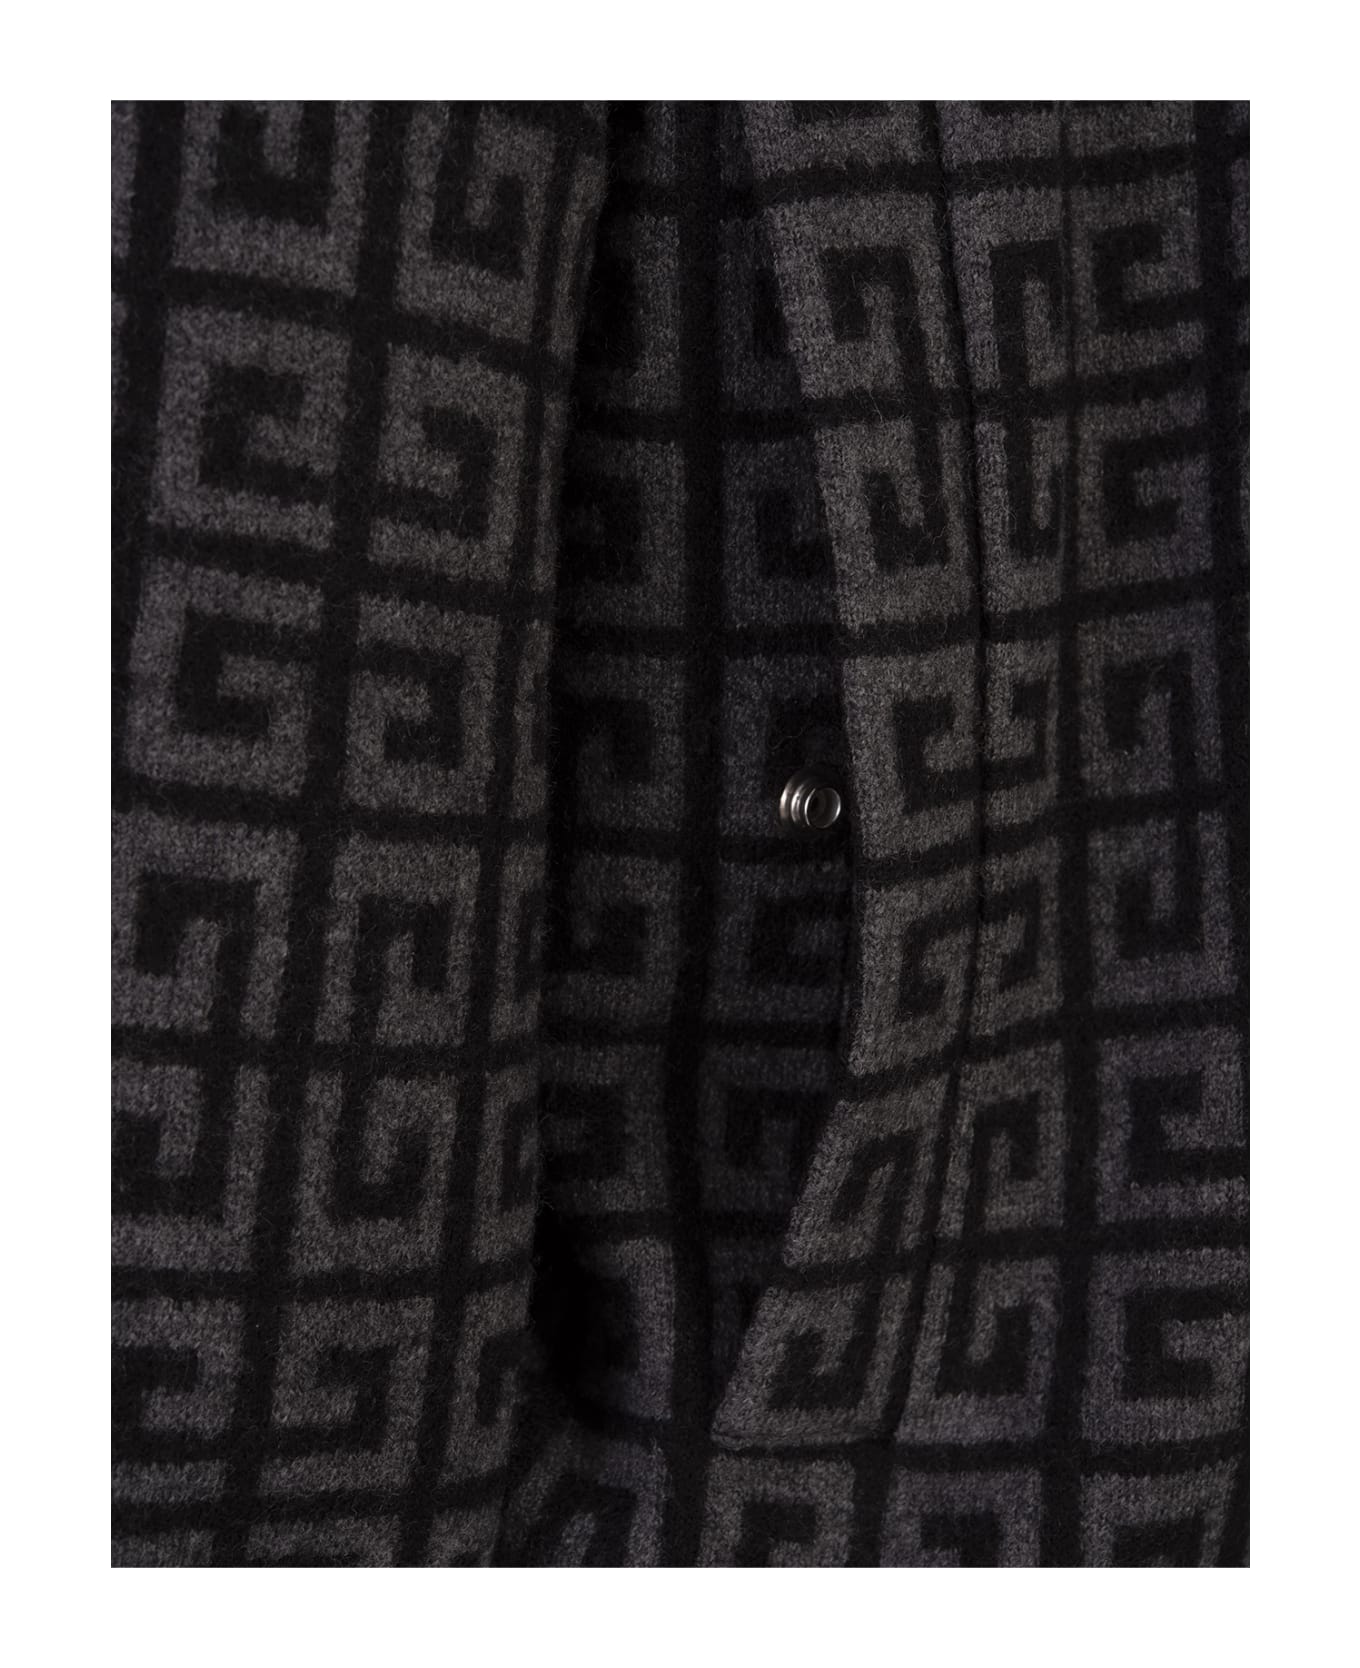 Givenchy Black Wool Reversible 4g Hooded Jacket - Black